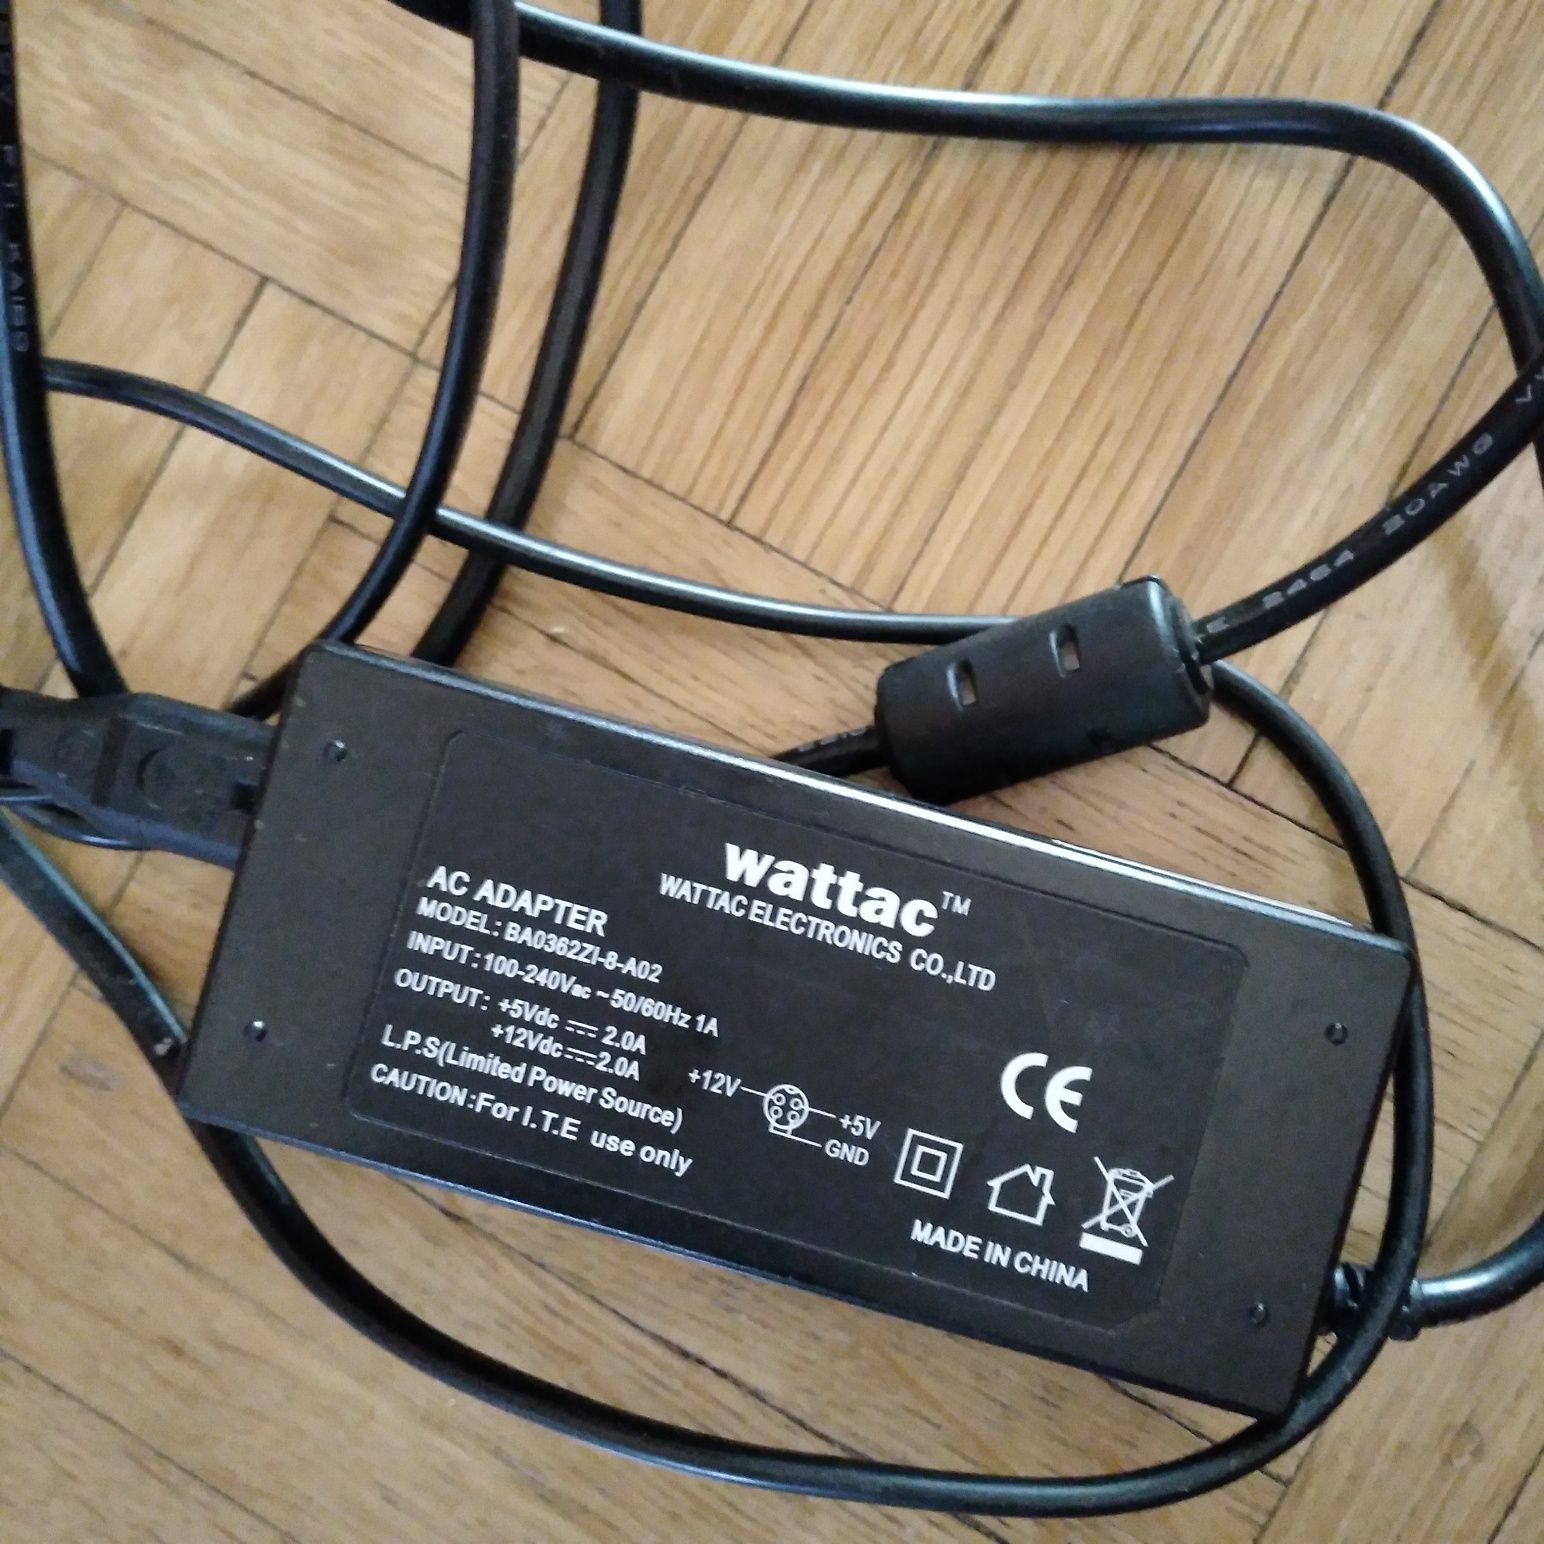 Adapter Wattac elektronics